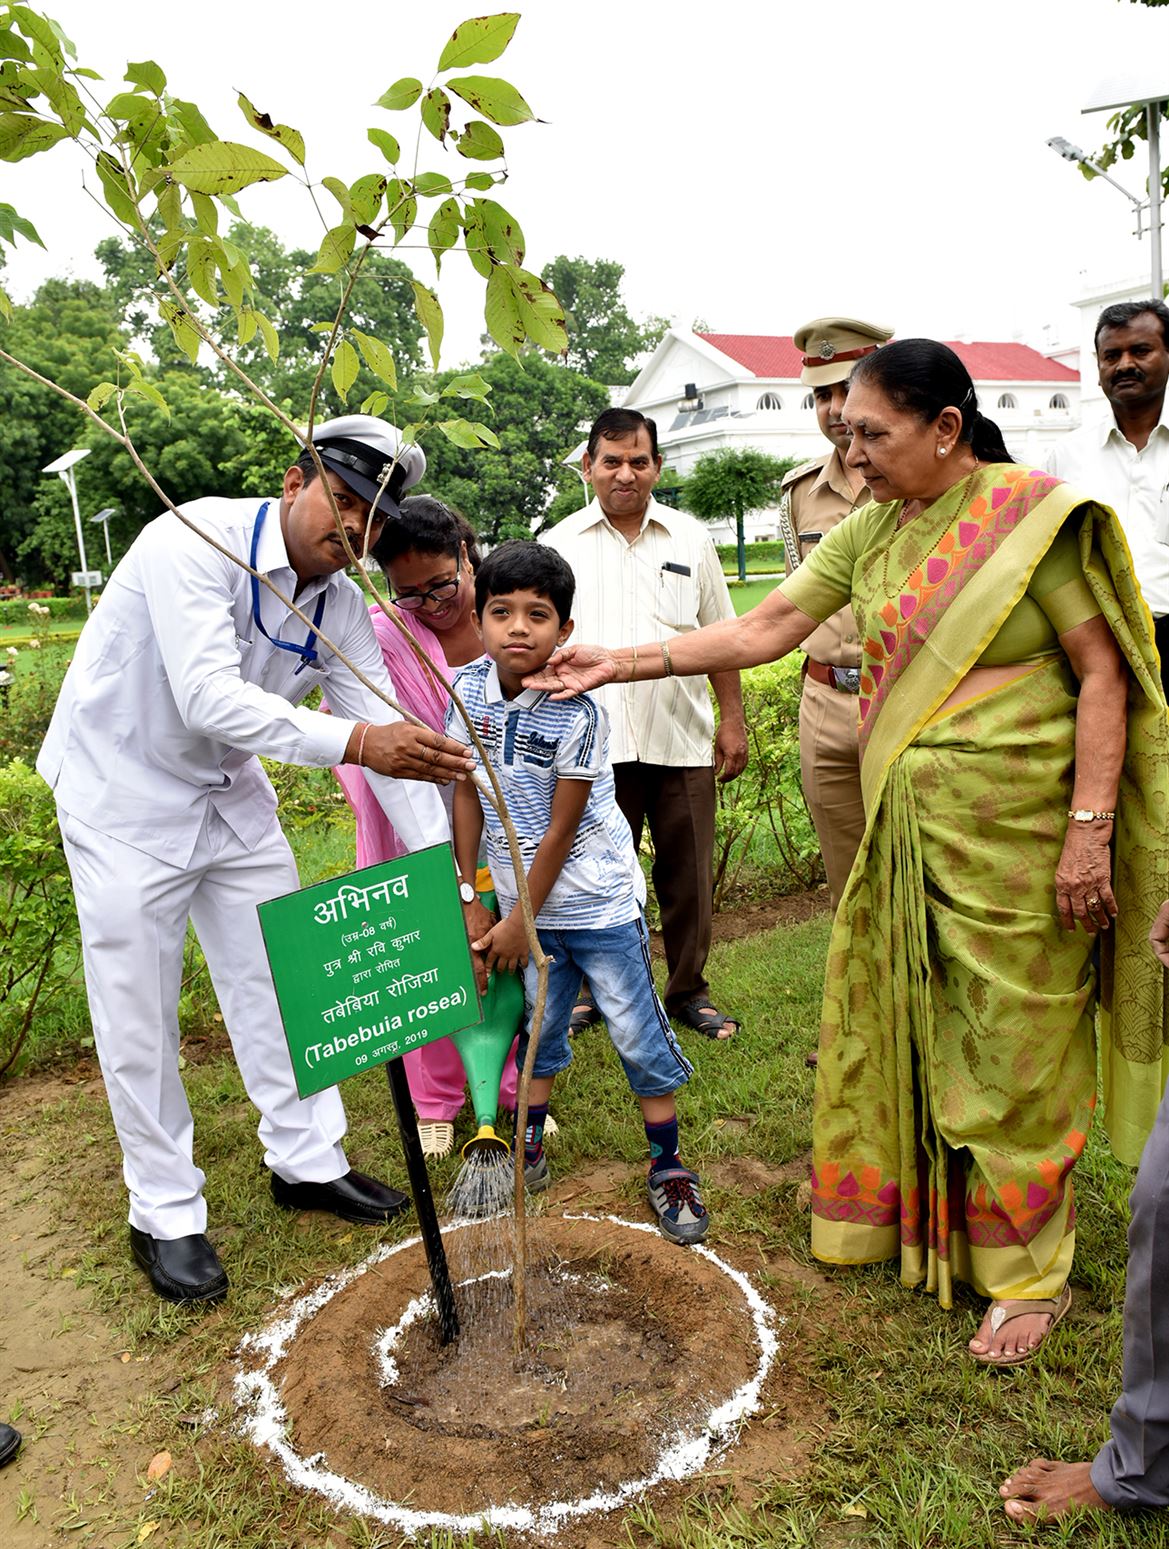 Children of officers and employees of Raj Bhavan planted saplings along with the Governor/राज्यपाल संग राजभवन के बच्चों ने पौधे लगाये 